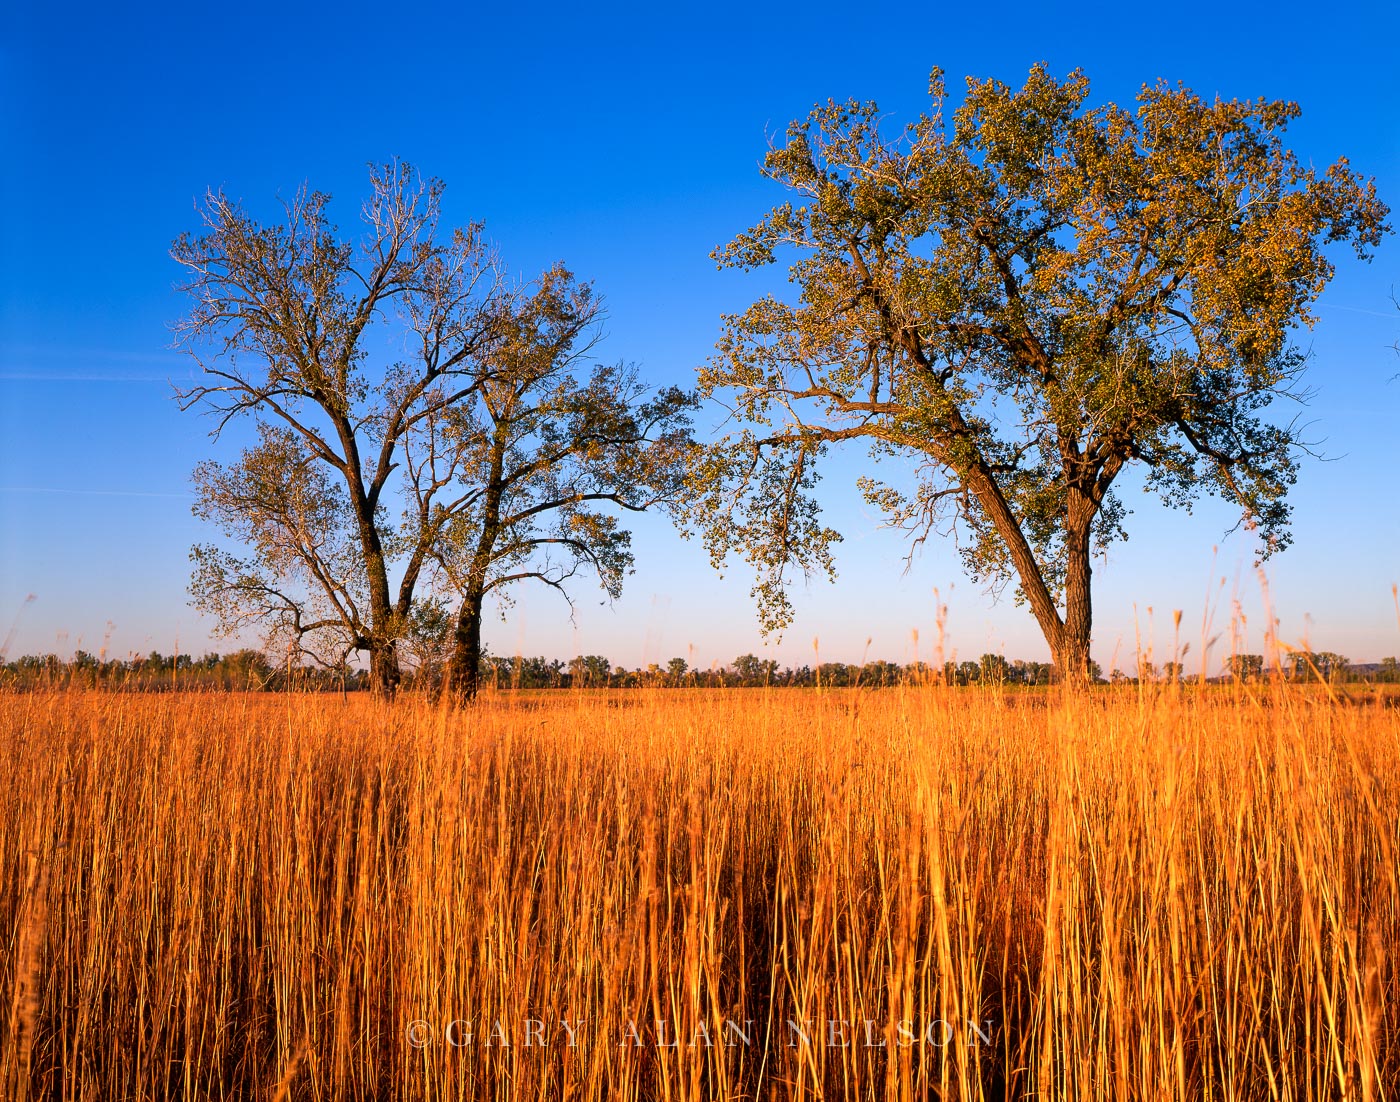 NE-03-1-NWR Prairie grasses and cottonwood trees, Boyer Chute National Wildlife Refuge, Missouri River botton, Nebraska